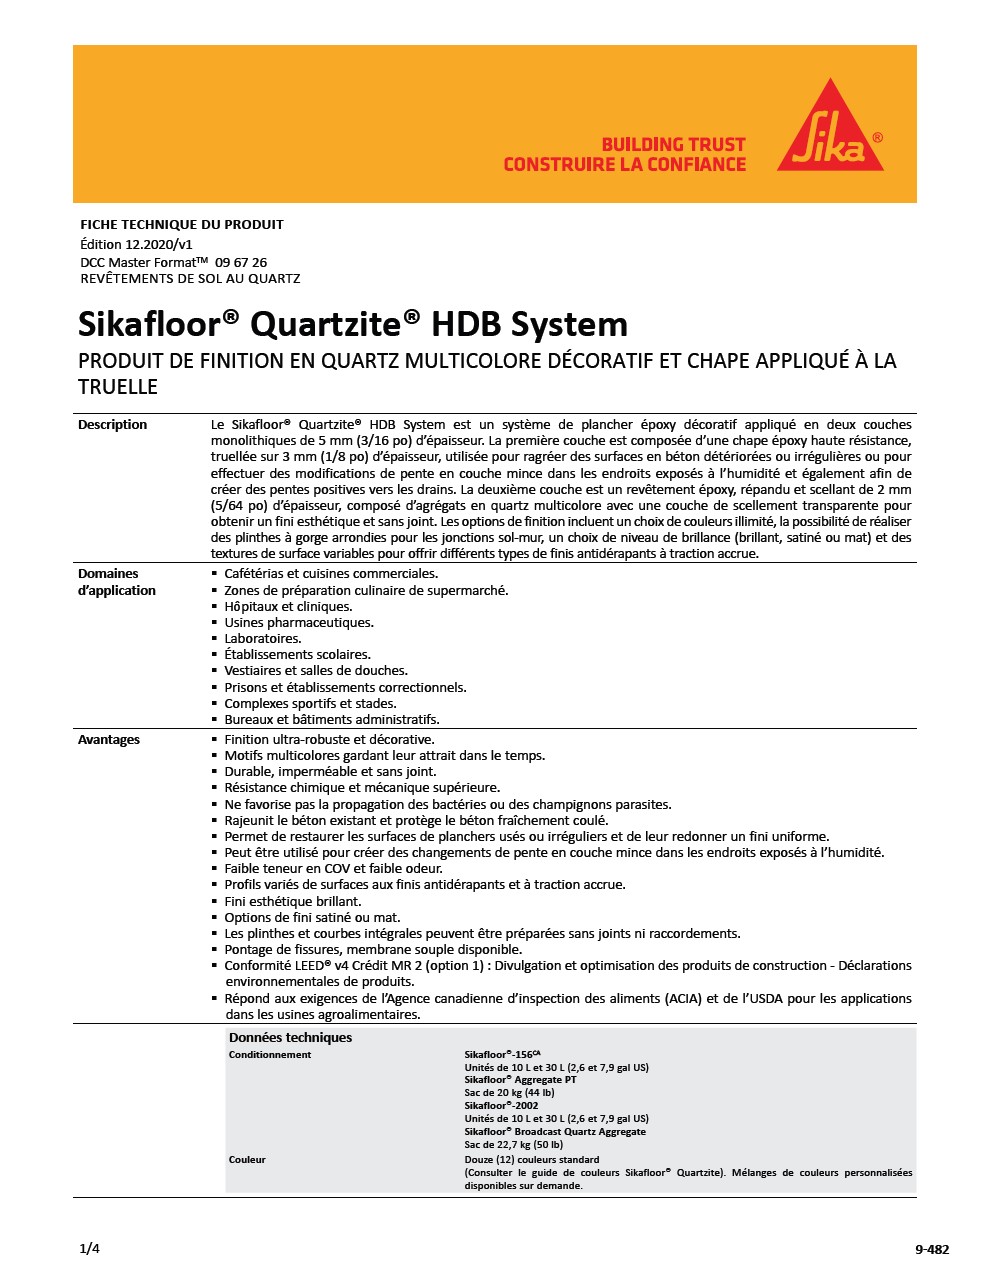 Sikafloor®-Quartzite®-HDB system